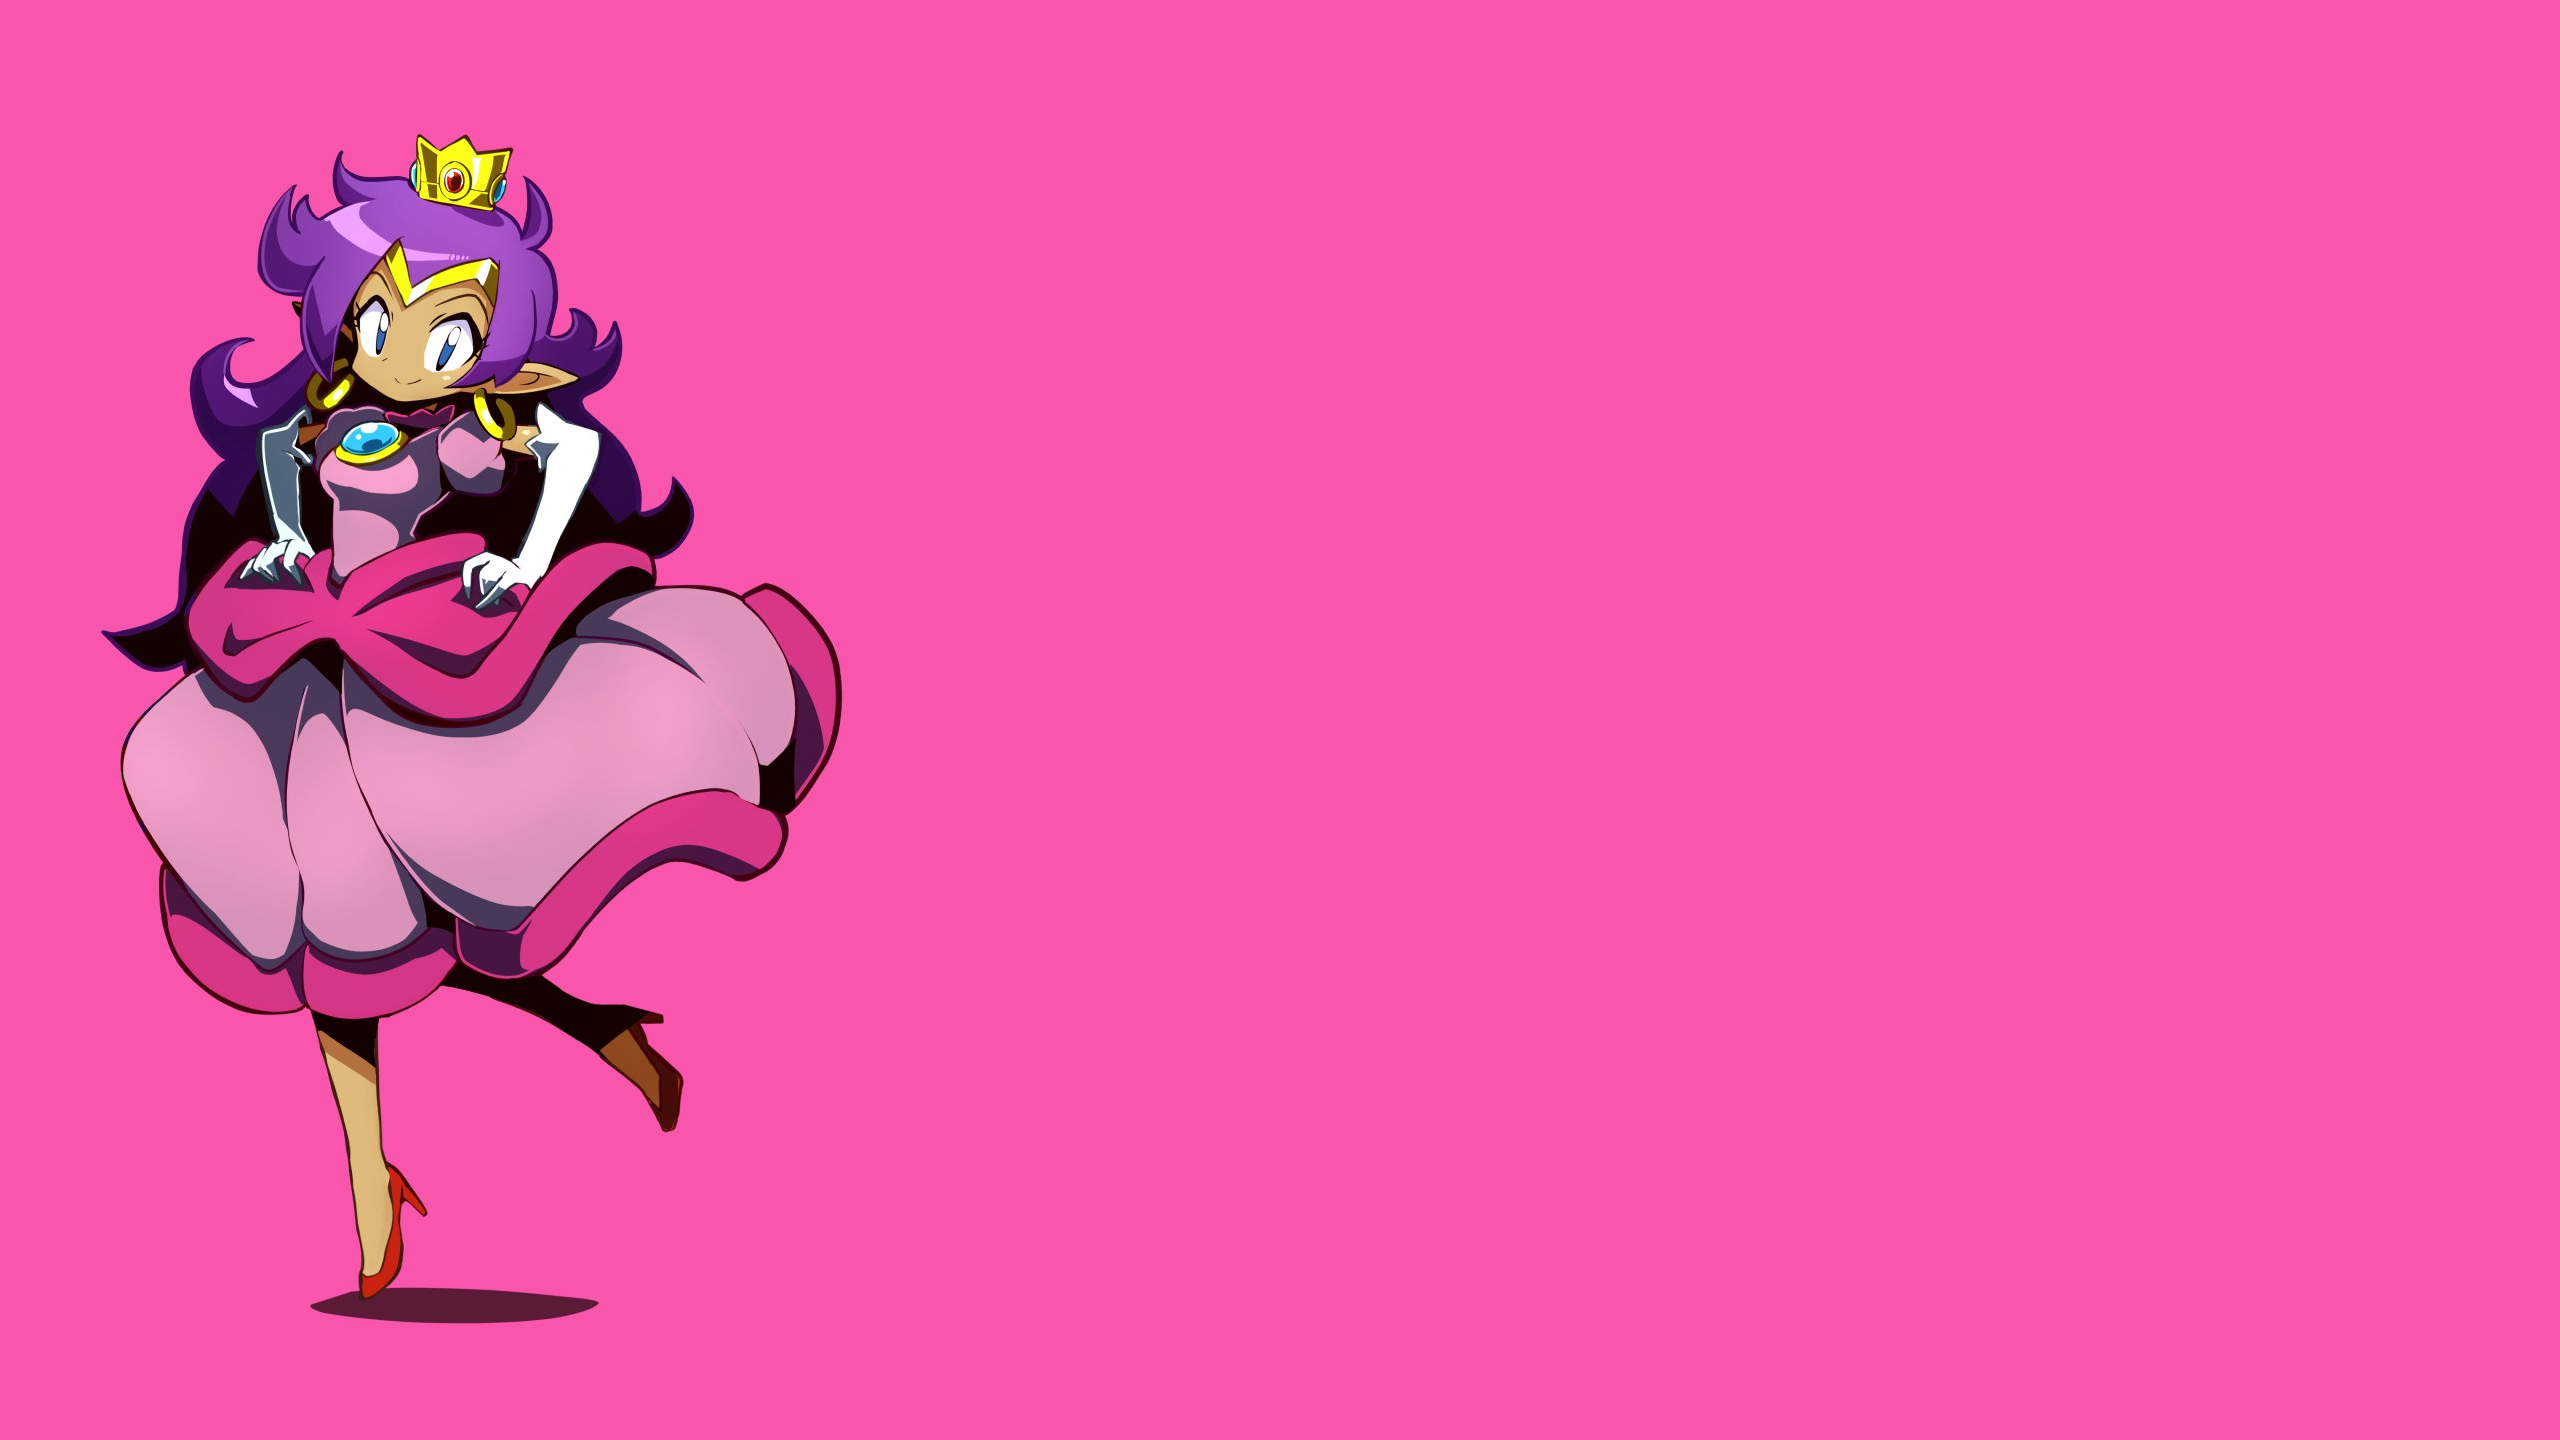 Shantae WayForward Nintendo Princess Peach Crossover Video Game Crossover Cosplay Alternate Costume  2560x1440